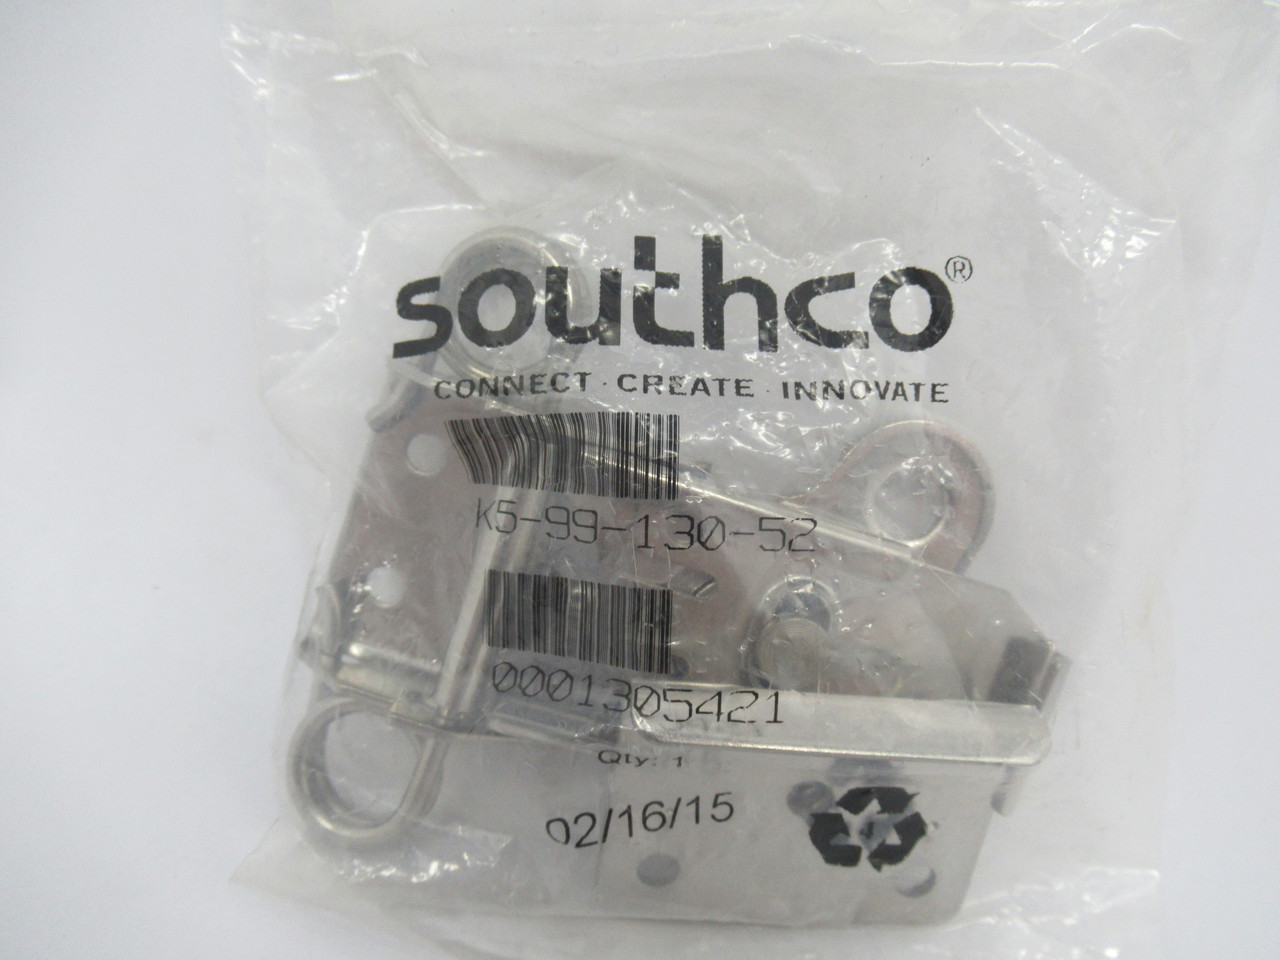 Southco K5-99-130-52 Rotary Drawer Latch Kit NWB